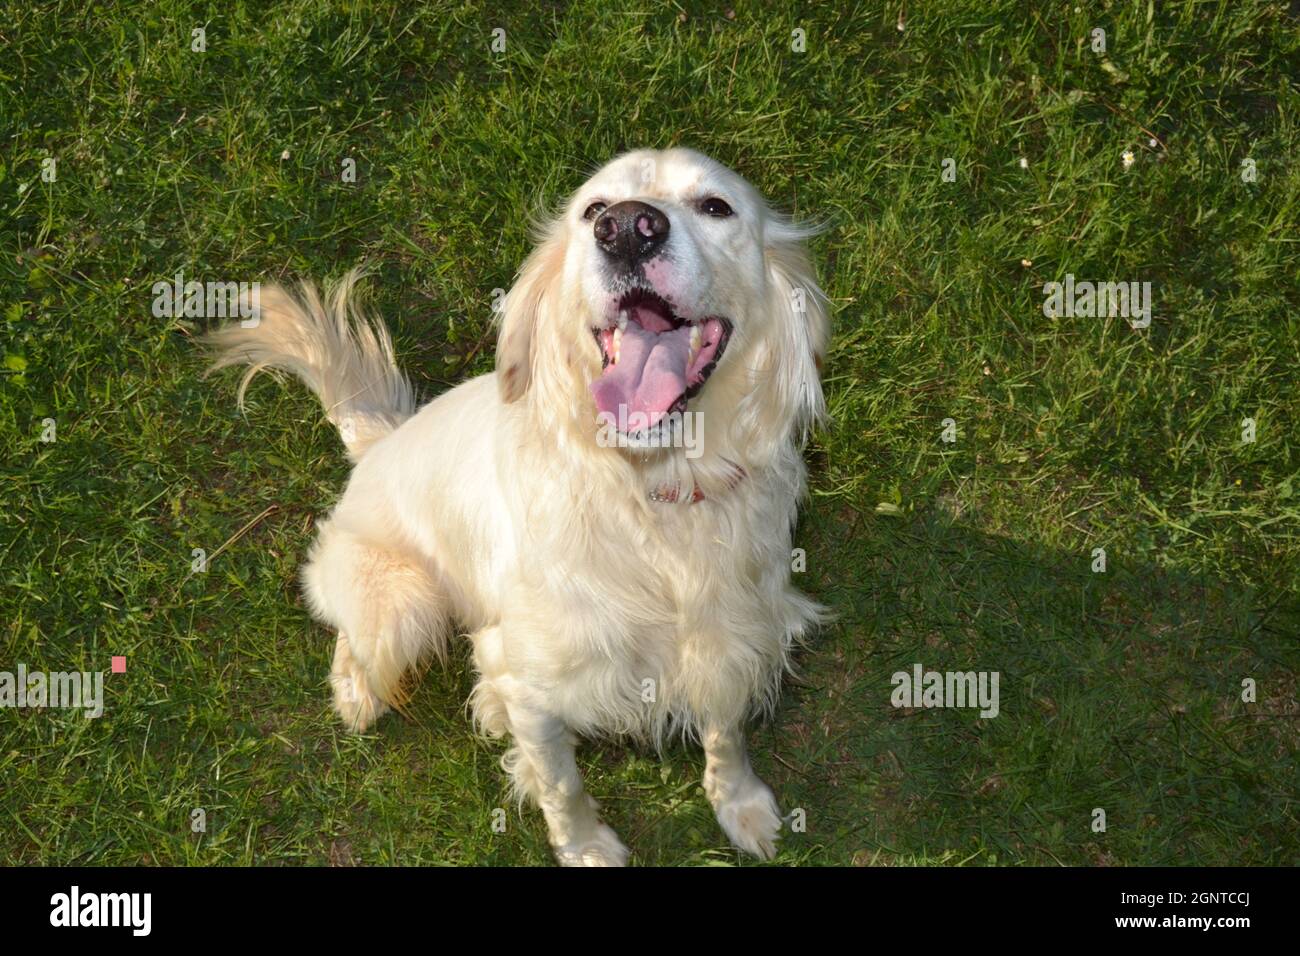 White Dog Happy English Setter Smiling on the Grass Stock Photo